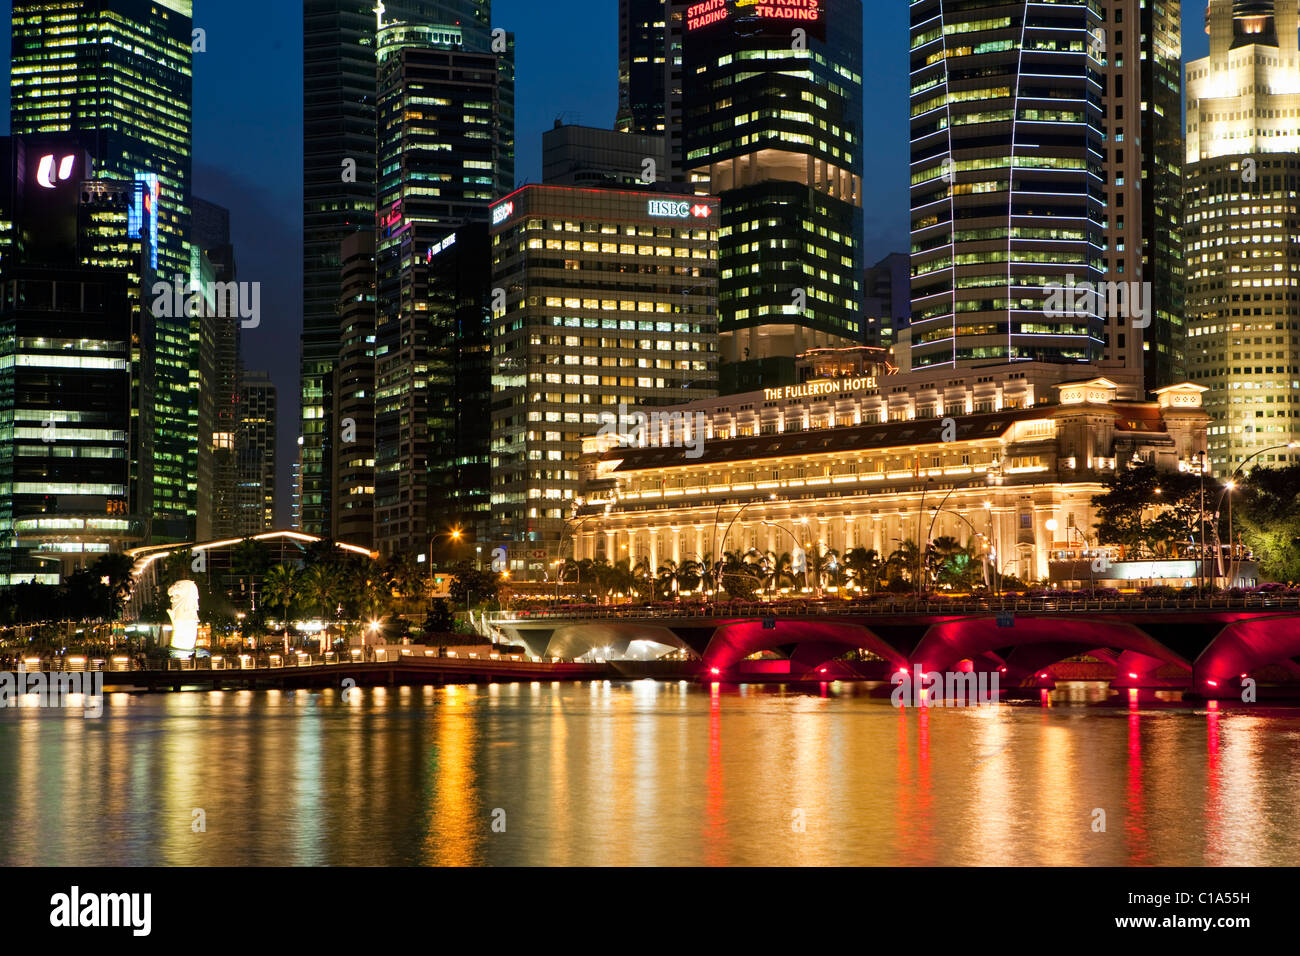 The Fullerton Hotel and city skyline at night.  Marina Bay, Singapore Stock Photo